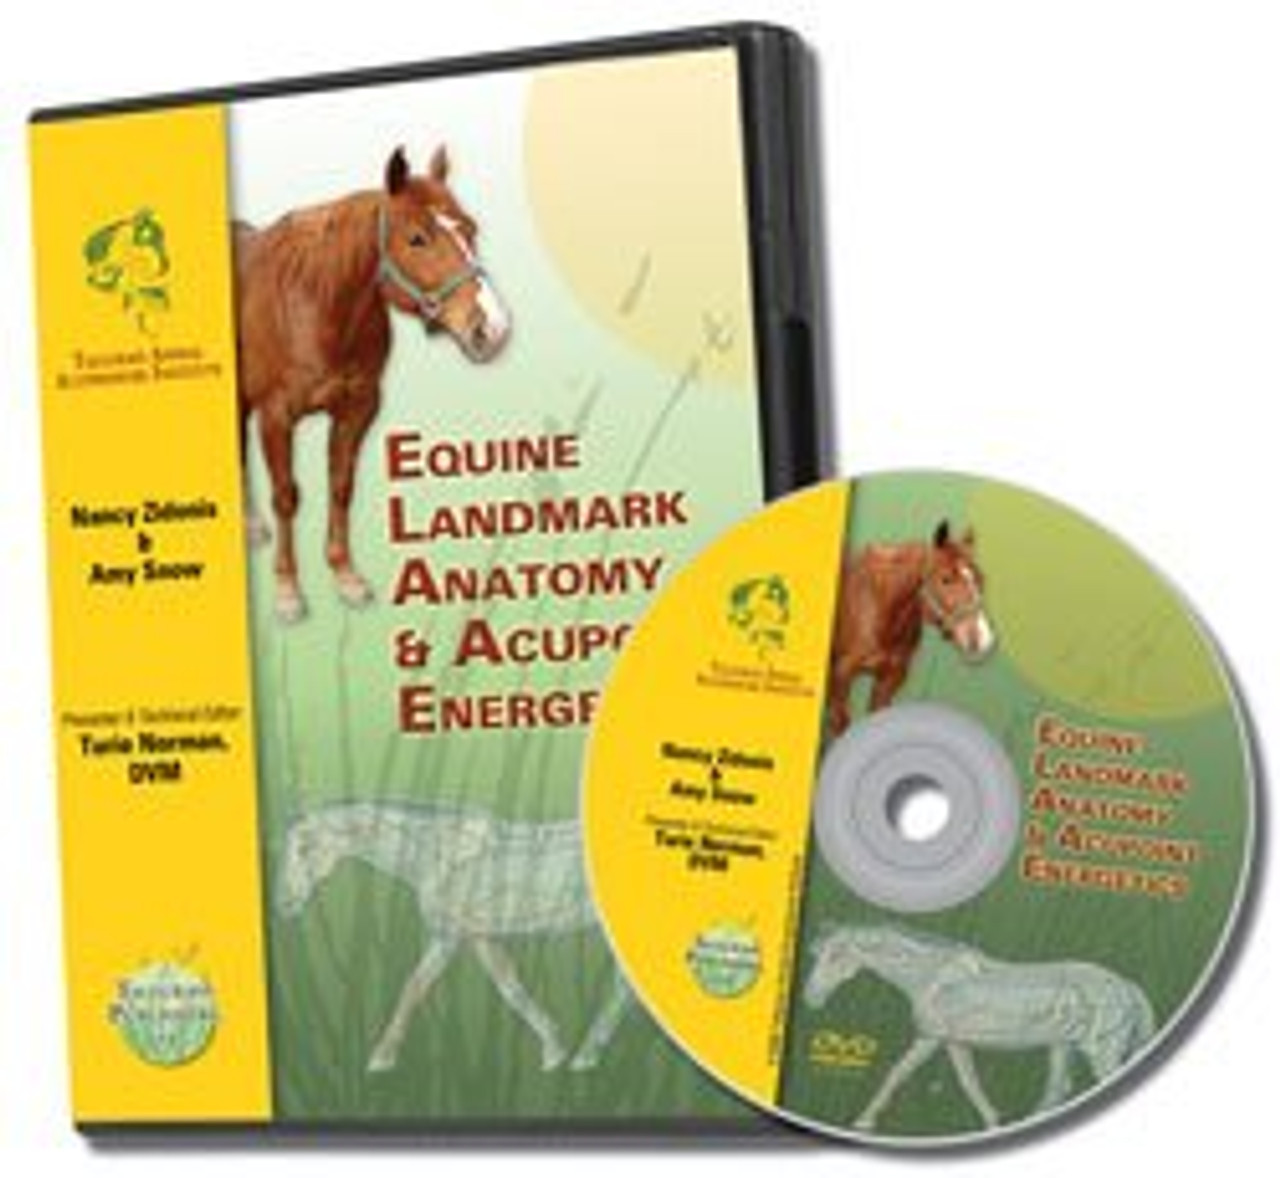 Equine Acupoint Energetics & Landmark Anatomy - DVD